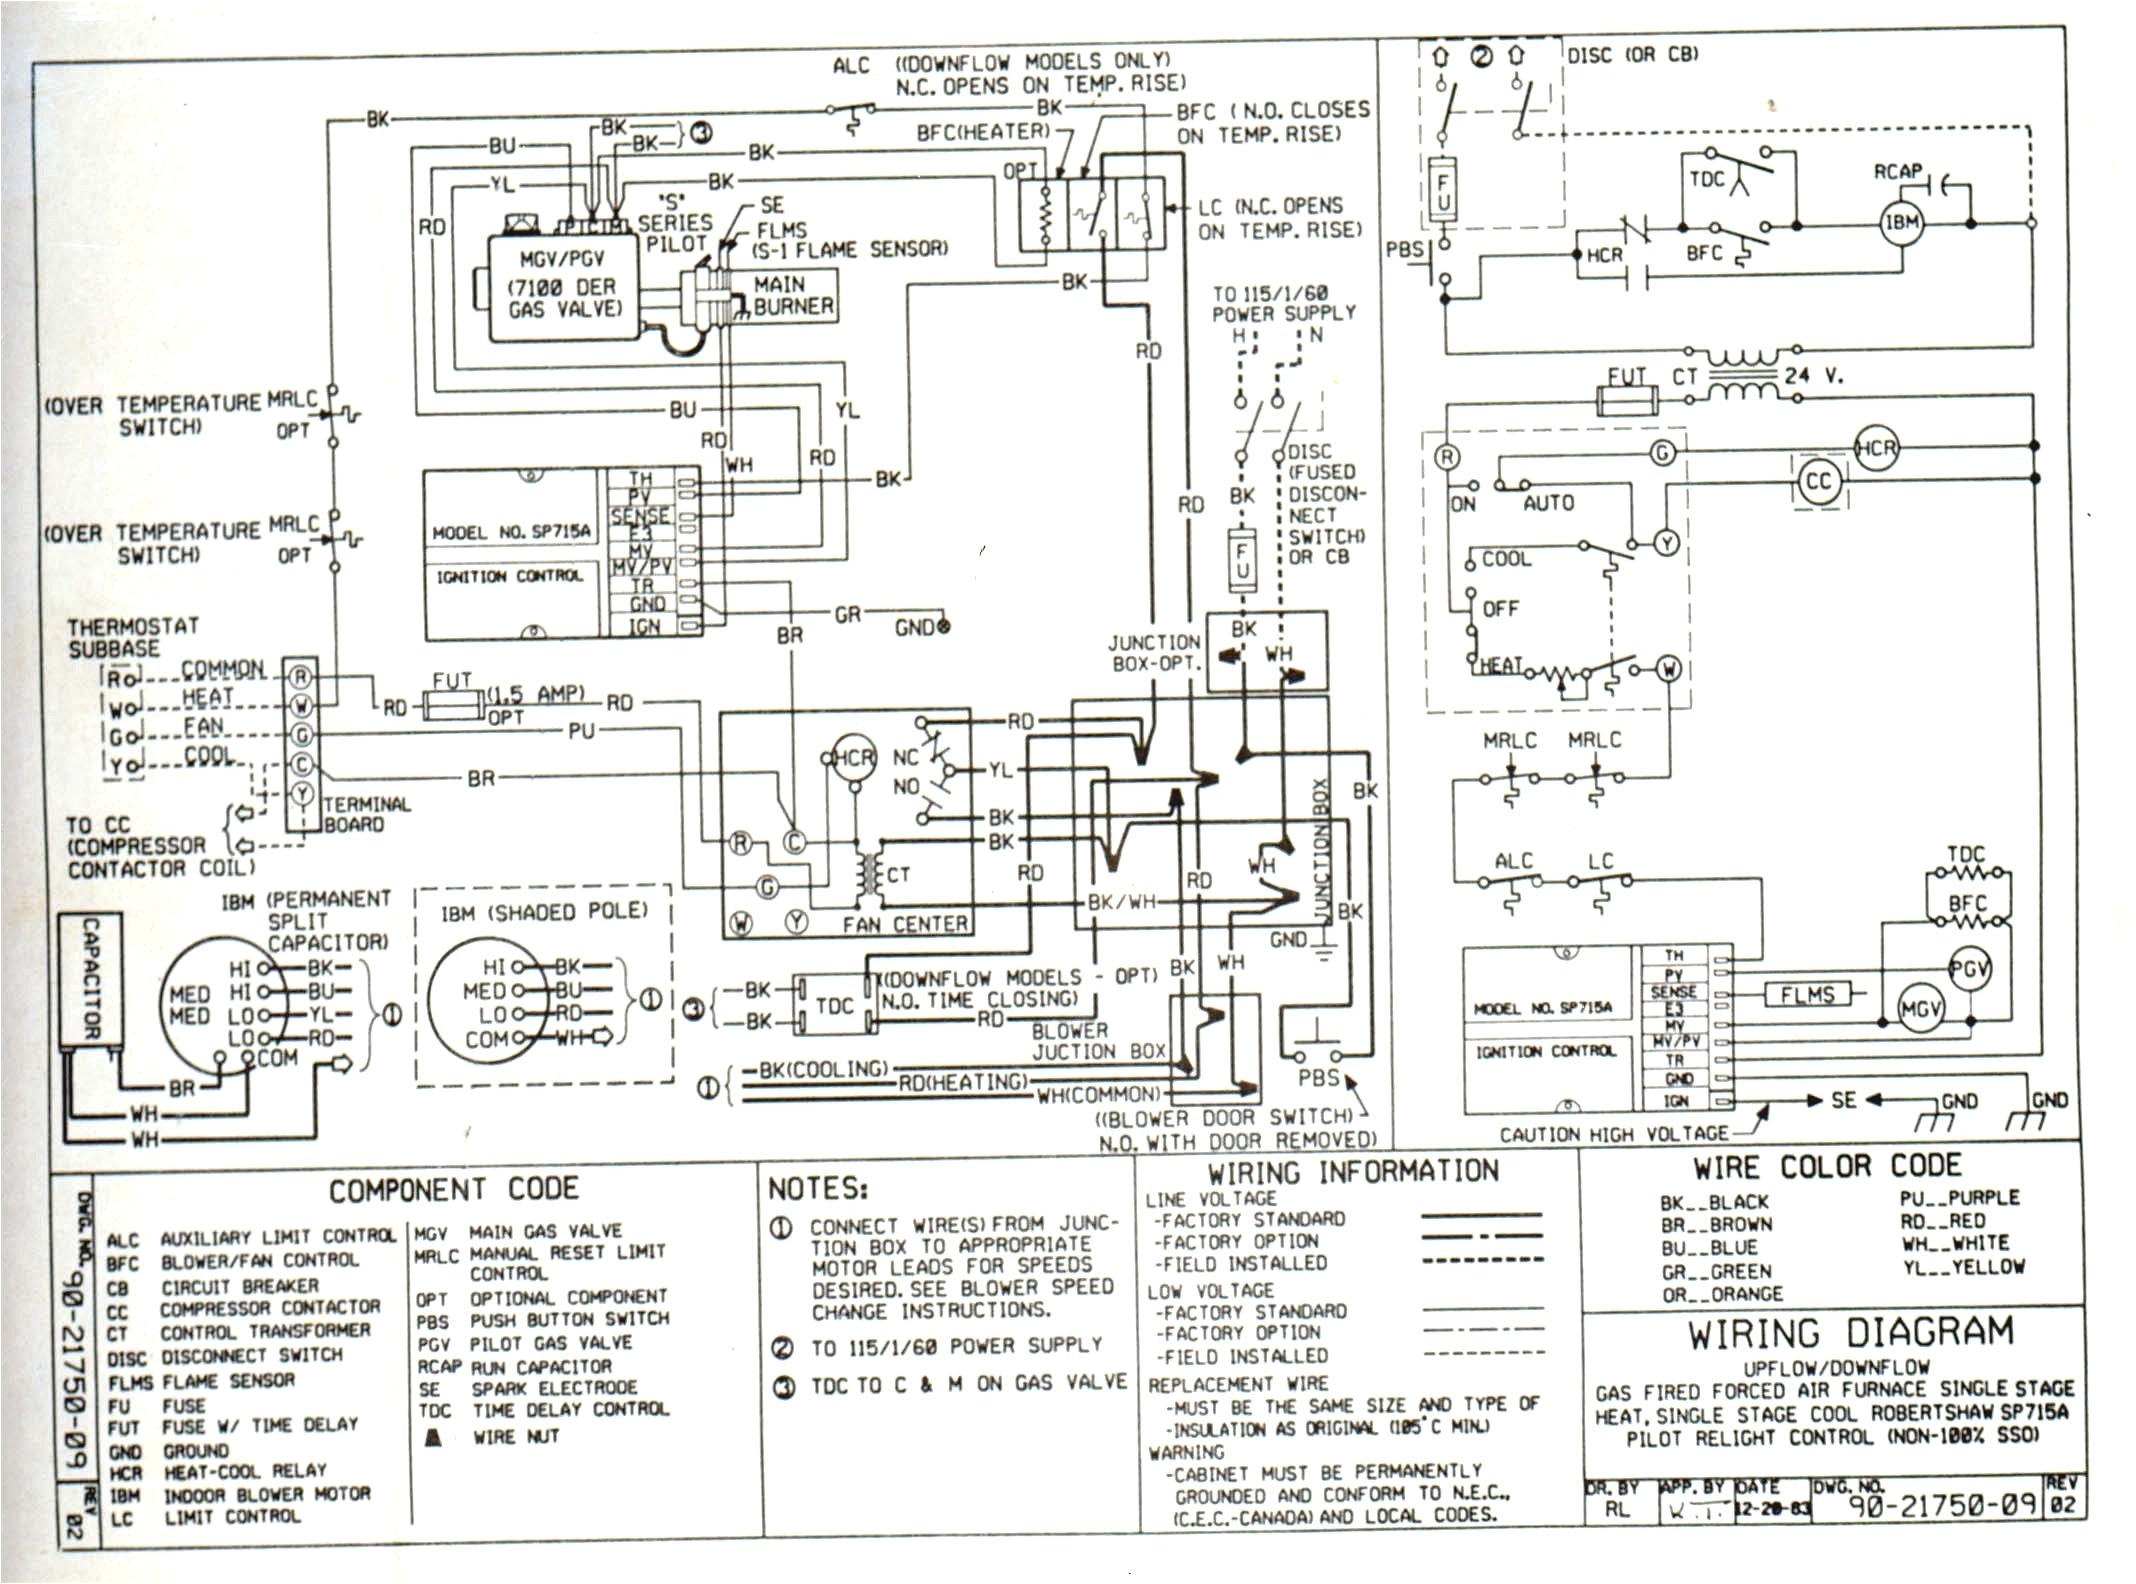 dayton heater wiring diagram wiring diagram database diagram dayton gas heater wiring diagram a rheem heat